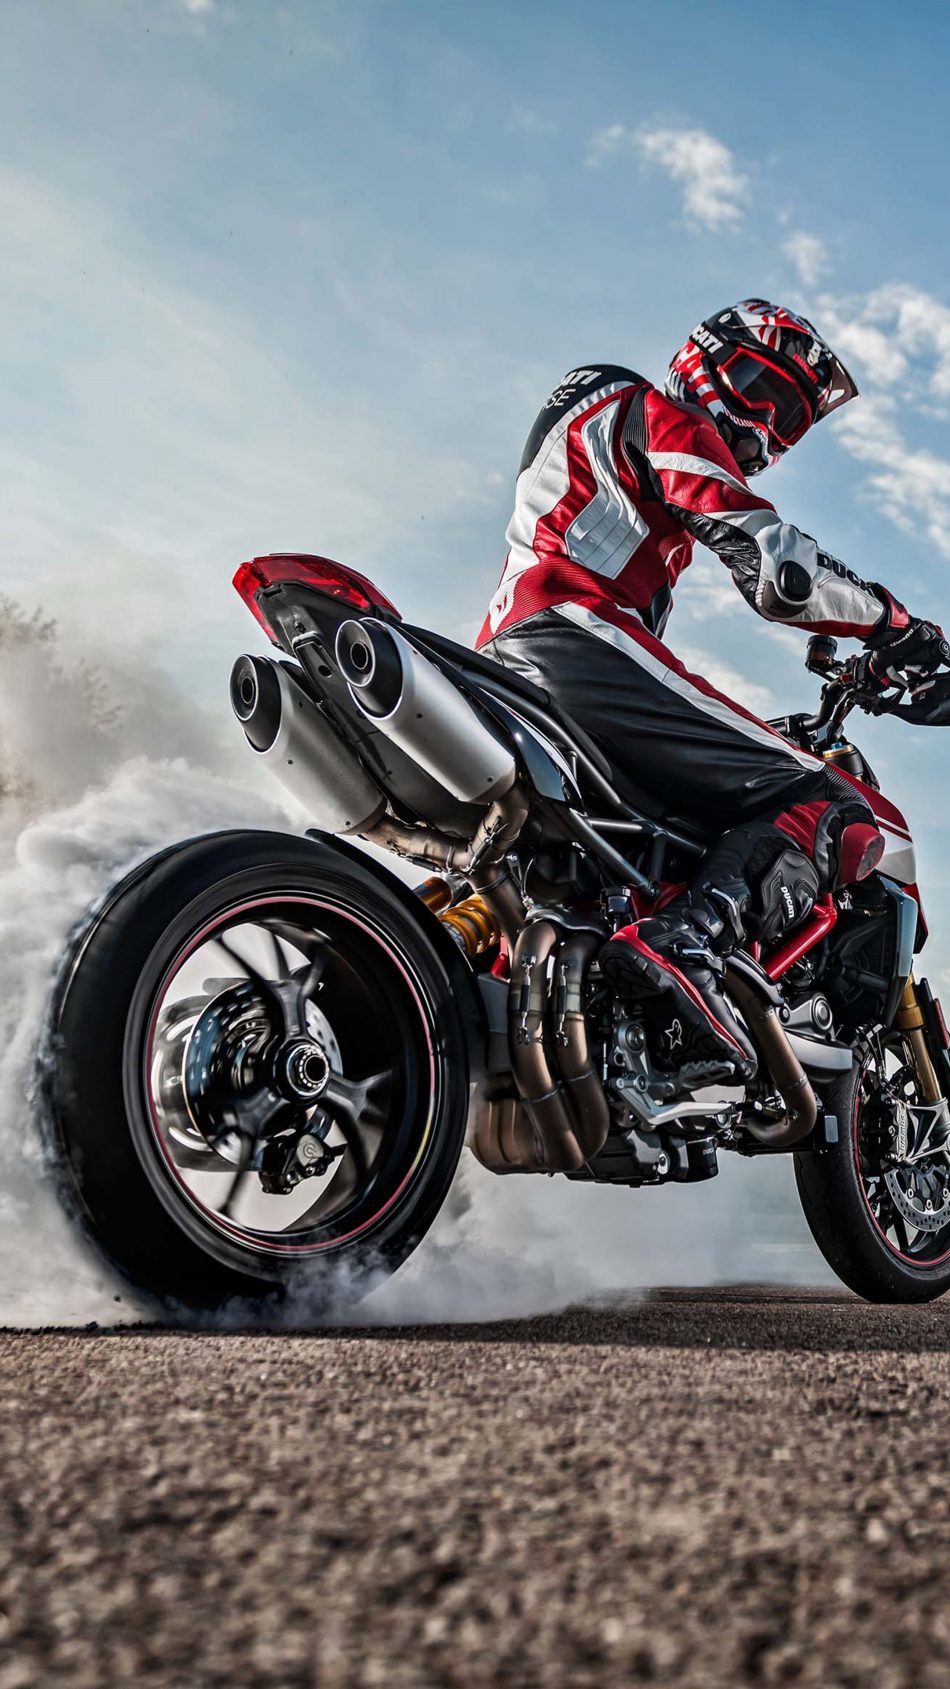 Ducati Hypermotard Sp Bike Burnout 4k Ultra HD Mobile Wallpaper